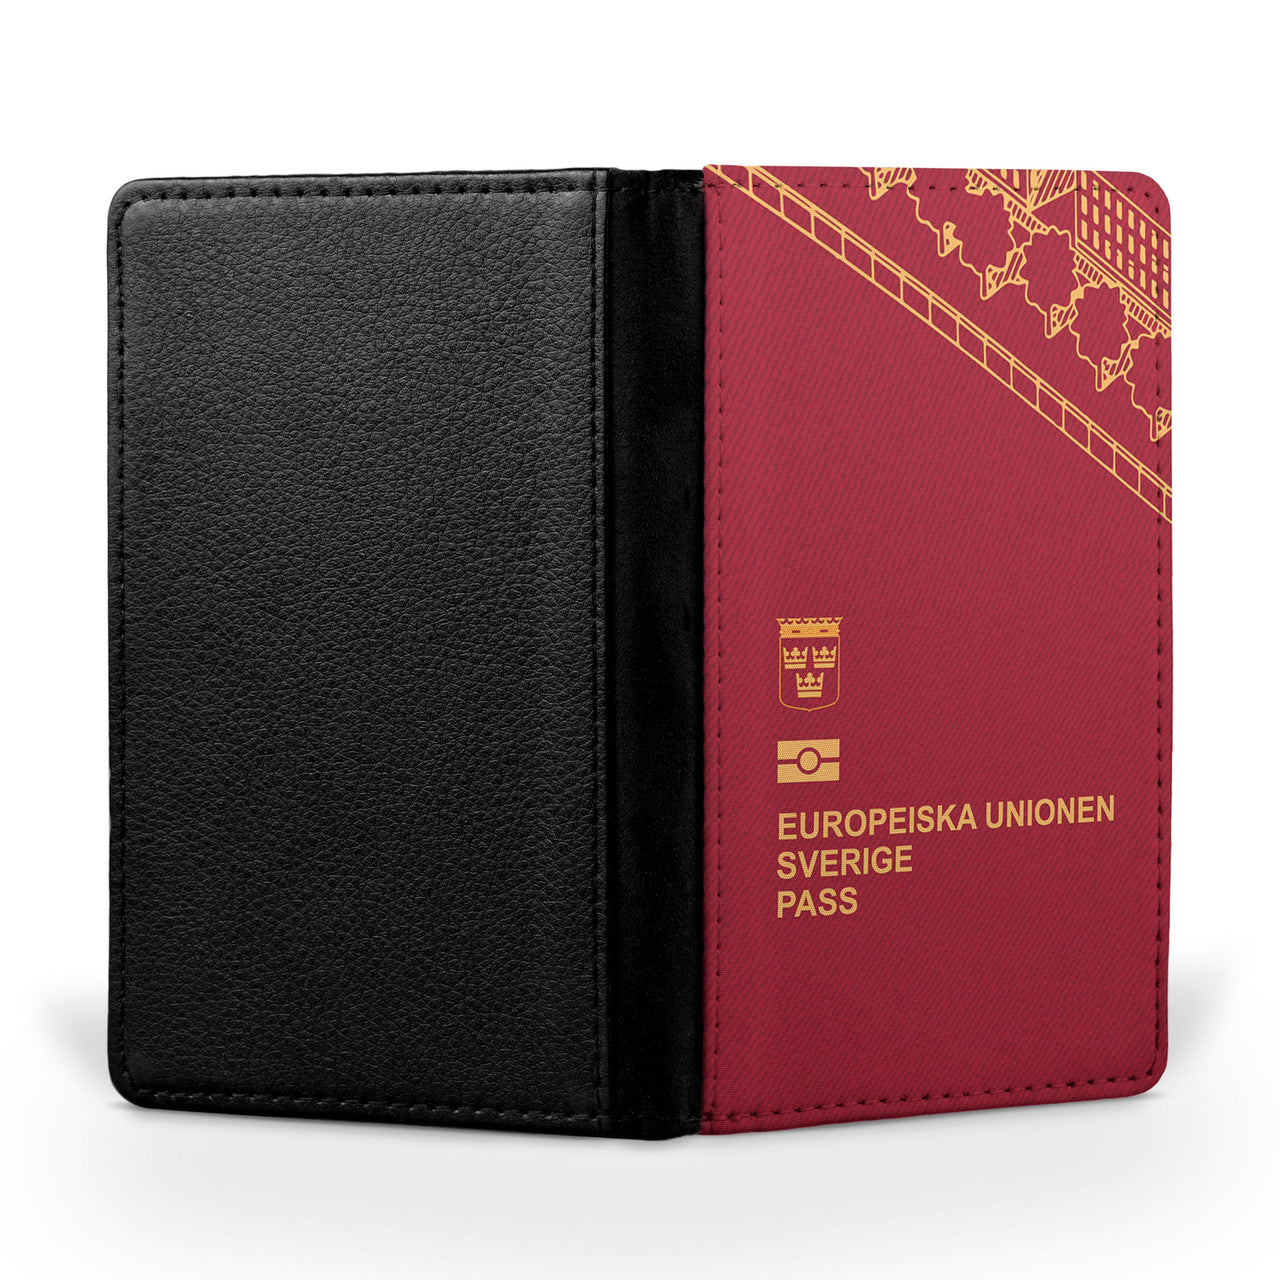 Sweden Passport Designed Passport & Travel Cases